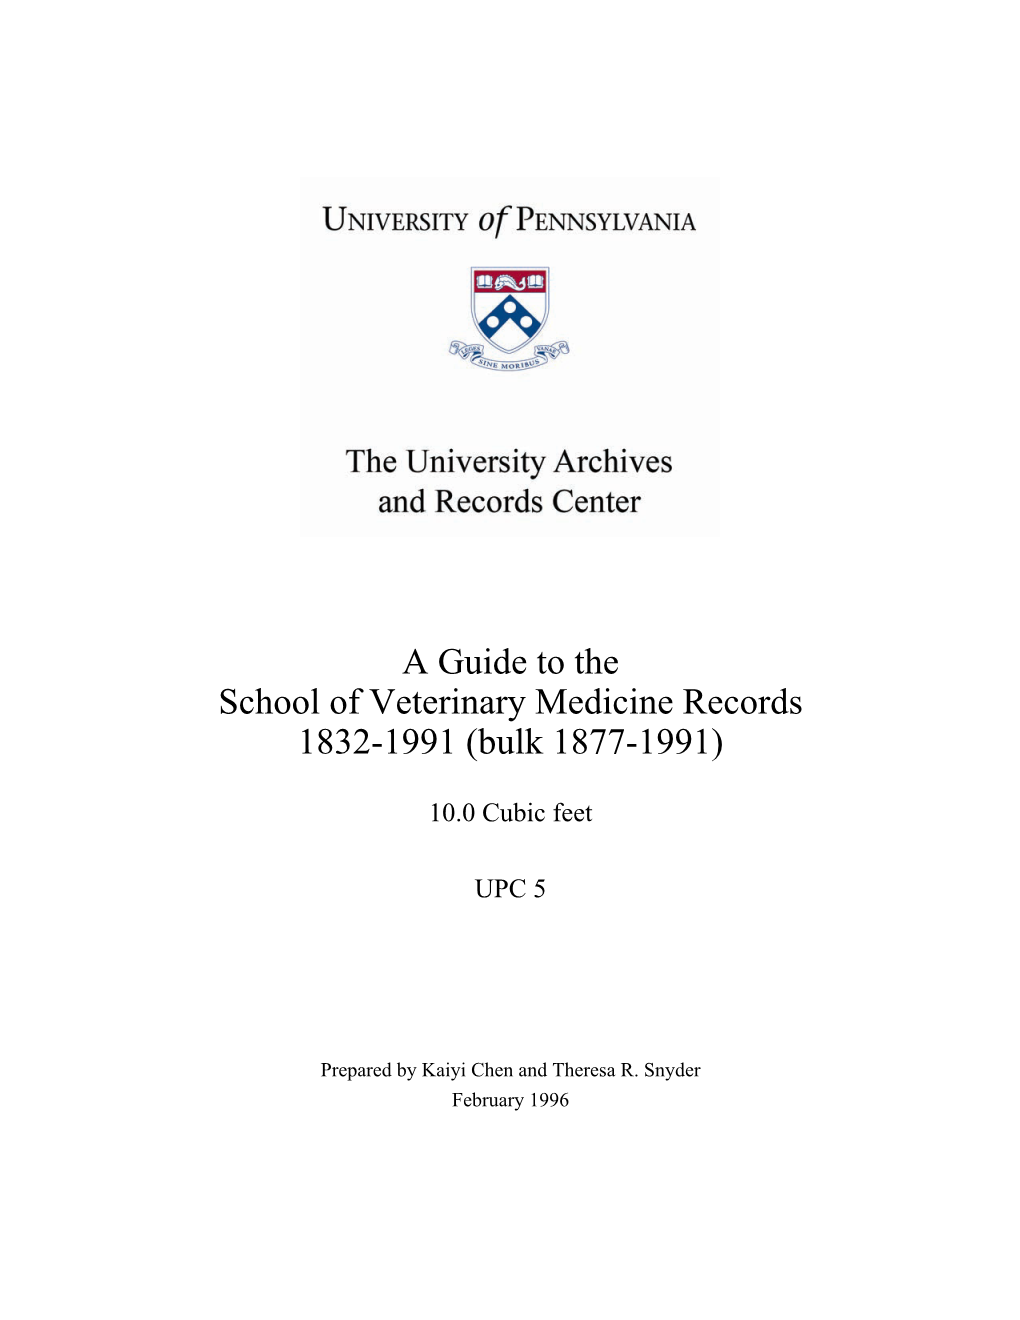 Guide, School of Veterinary Medicine Records (UPC 5)